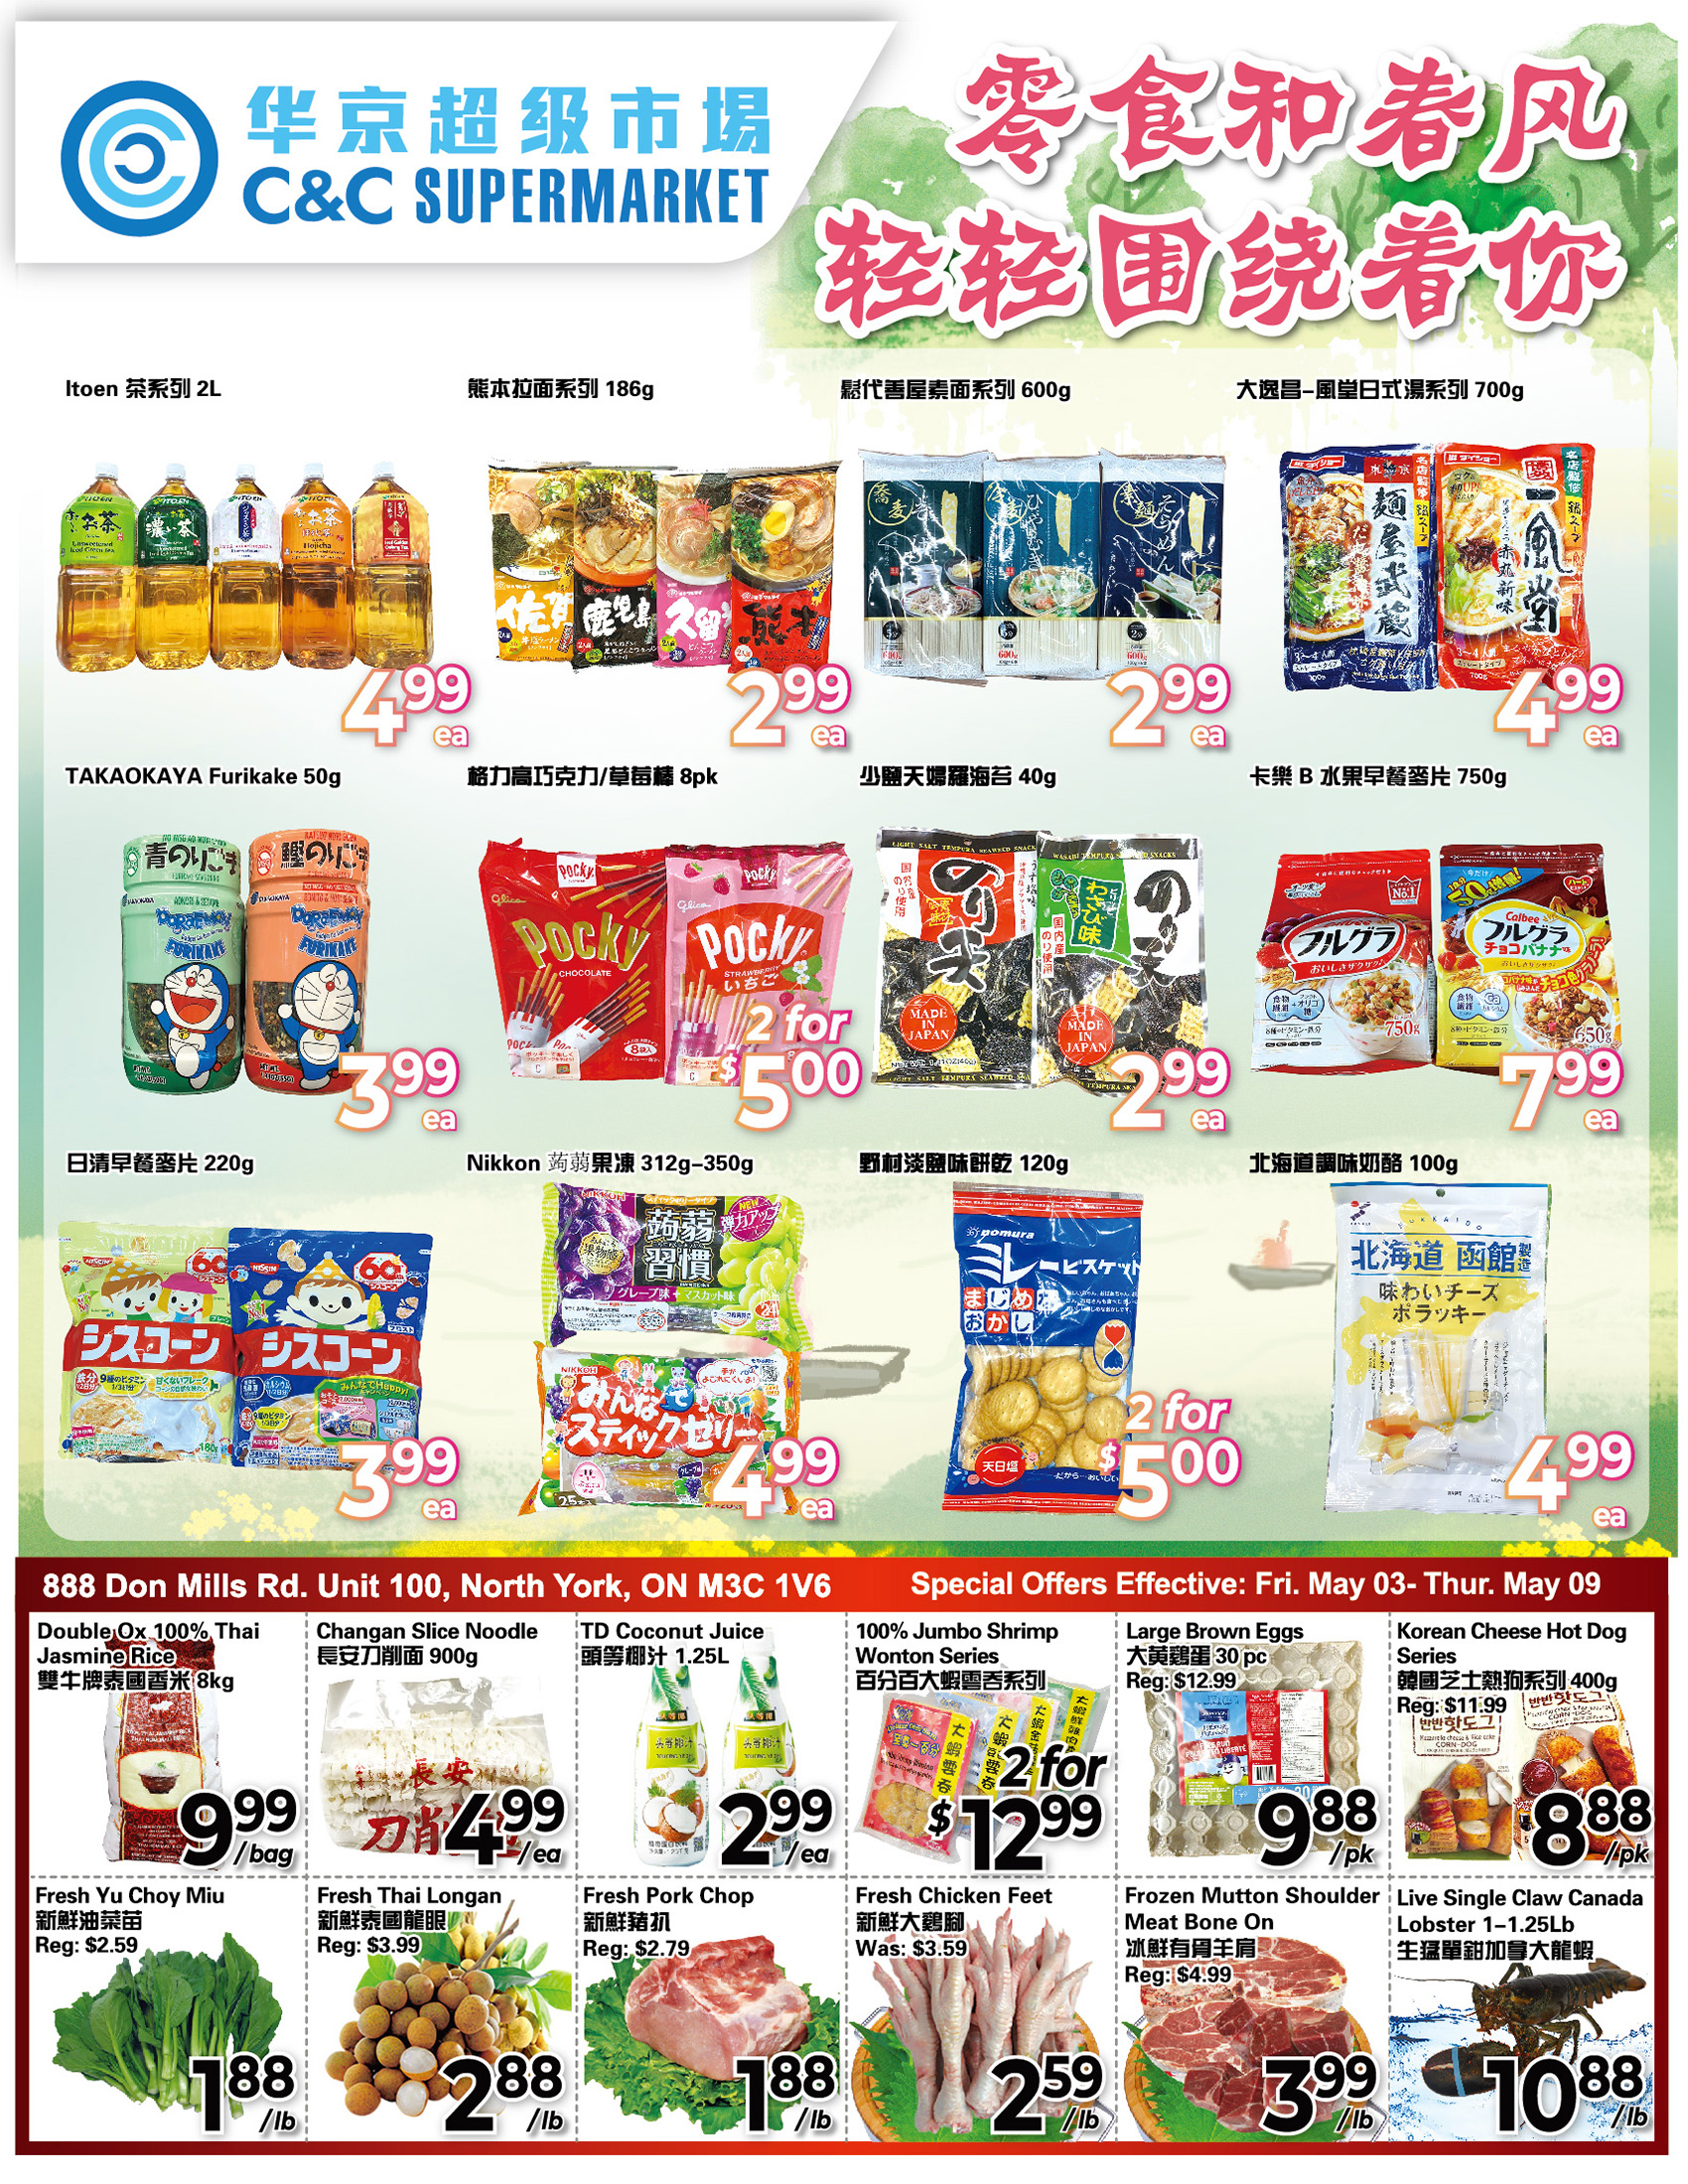 C&C Supermarket - Weekly Flyer Specials